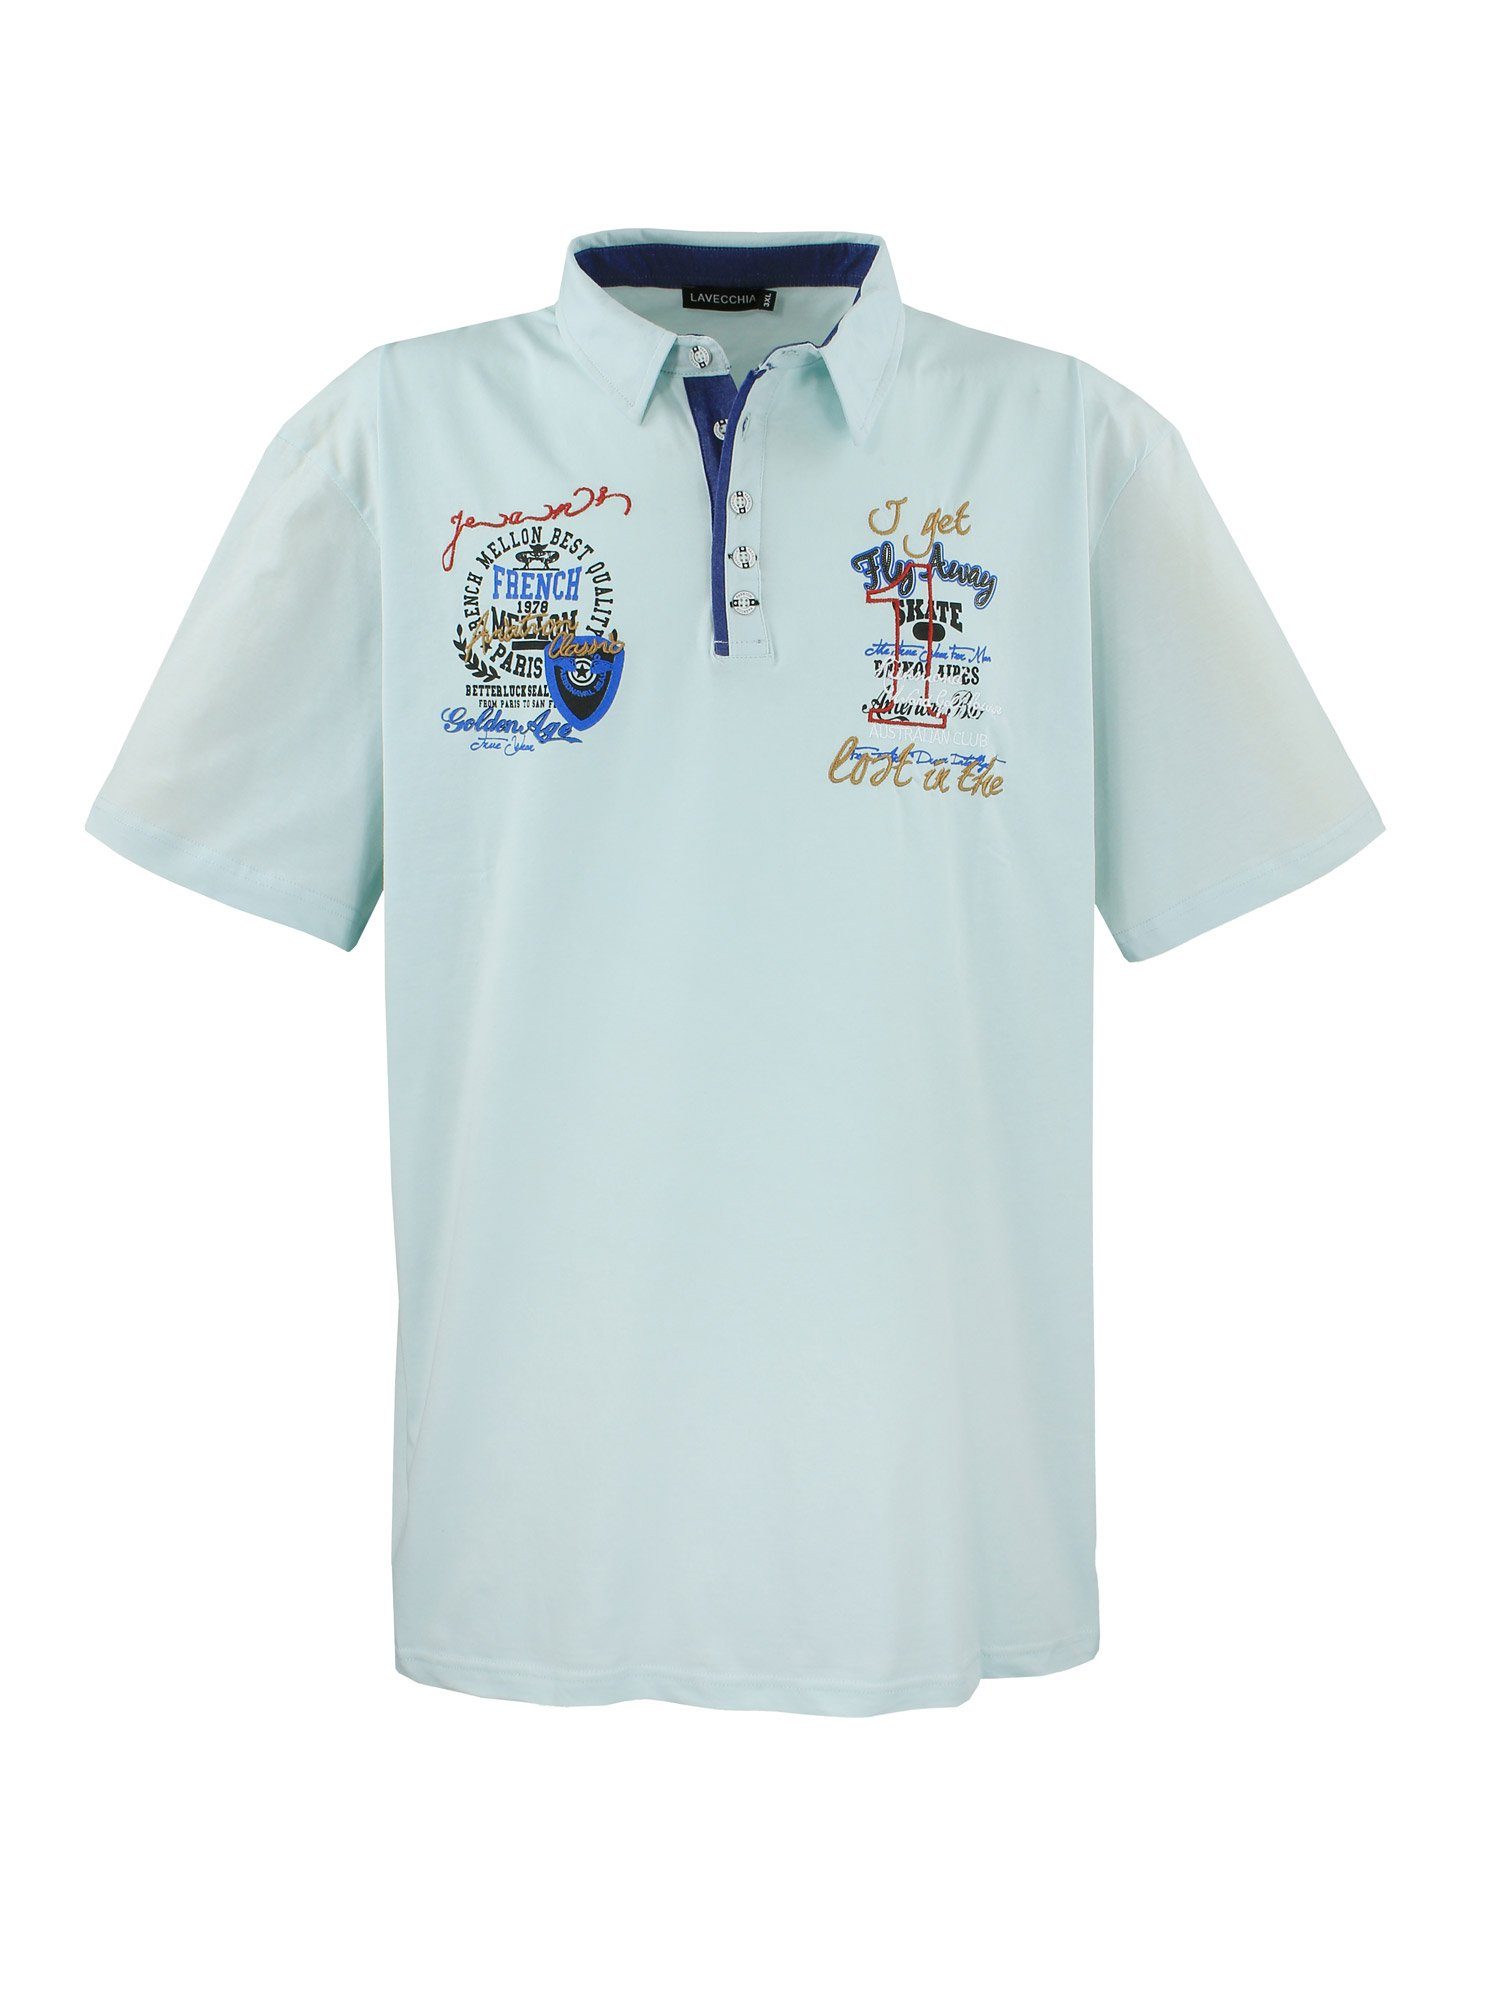 Lavecchia Poloshirt Übergrößen Herren Polo Shirt LV-3101 Herren Polo Shirt mint